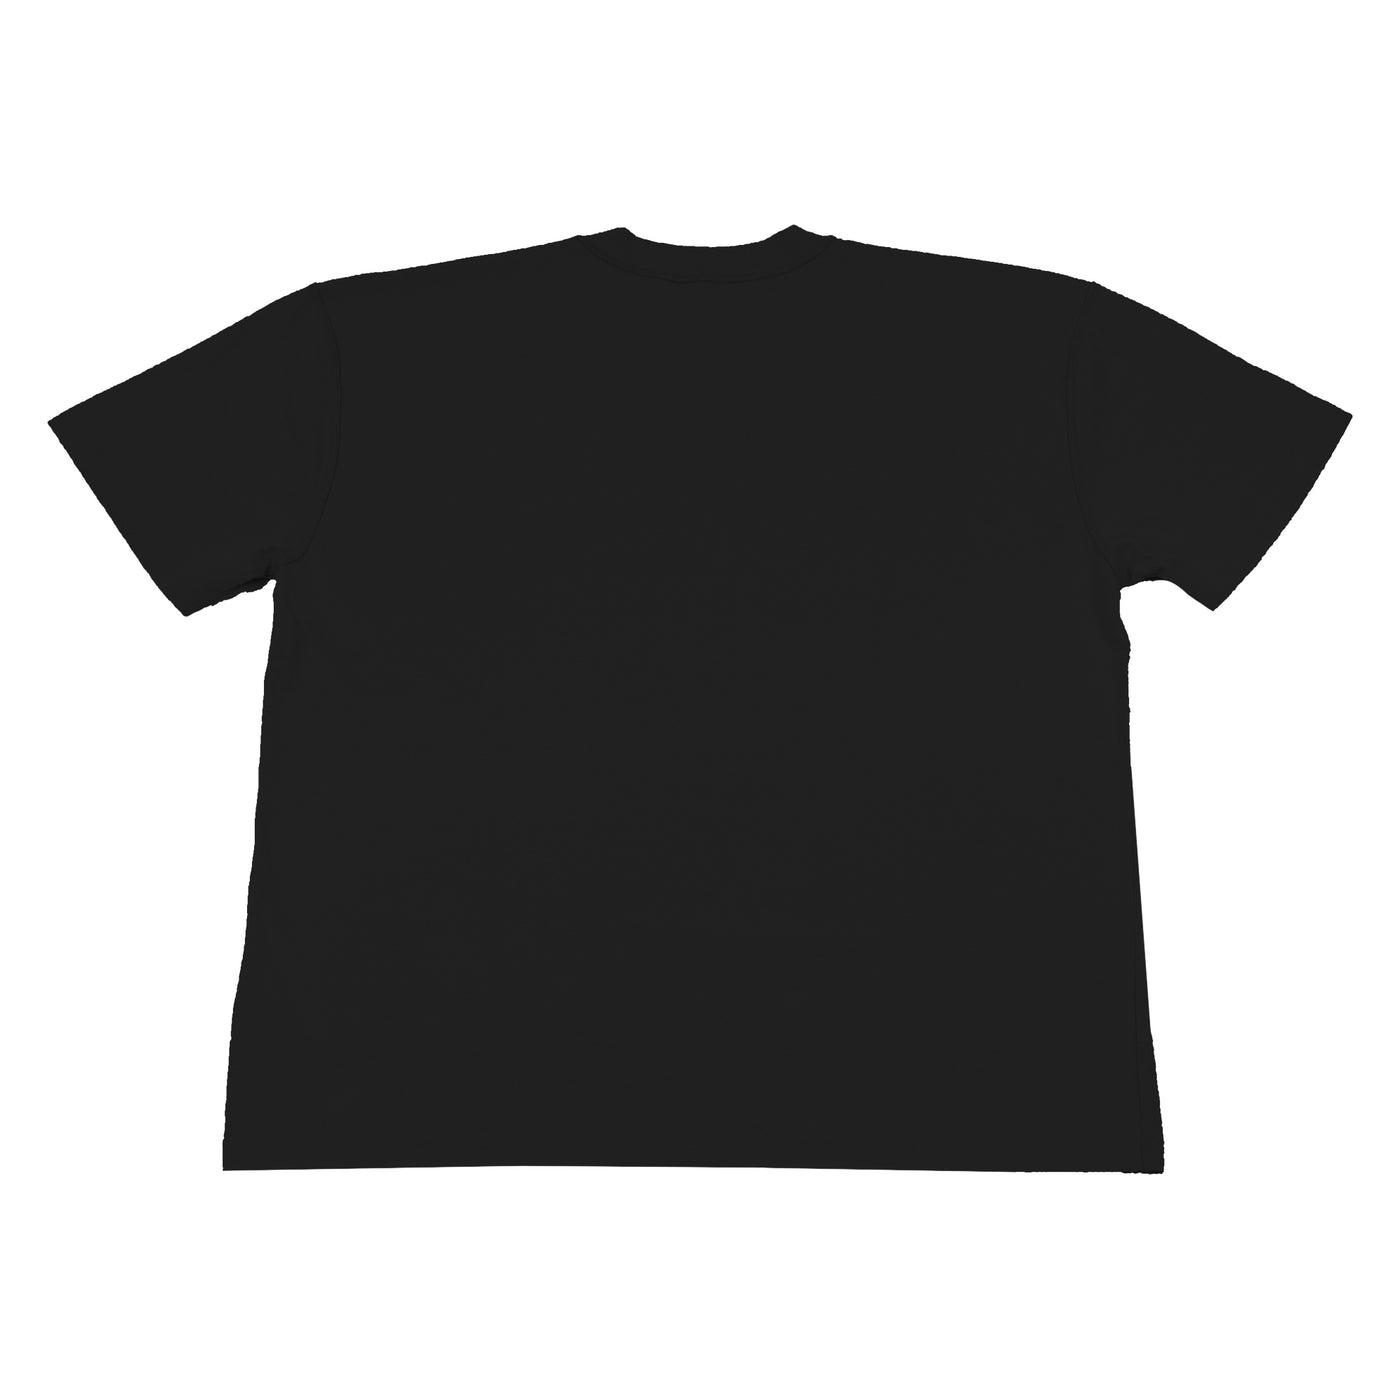 Limited Edition (Ultra) T-Shirt - Black - Rear